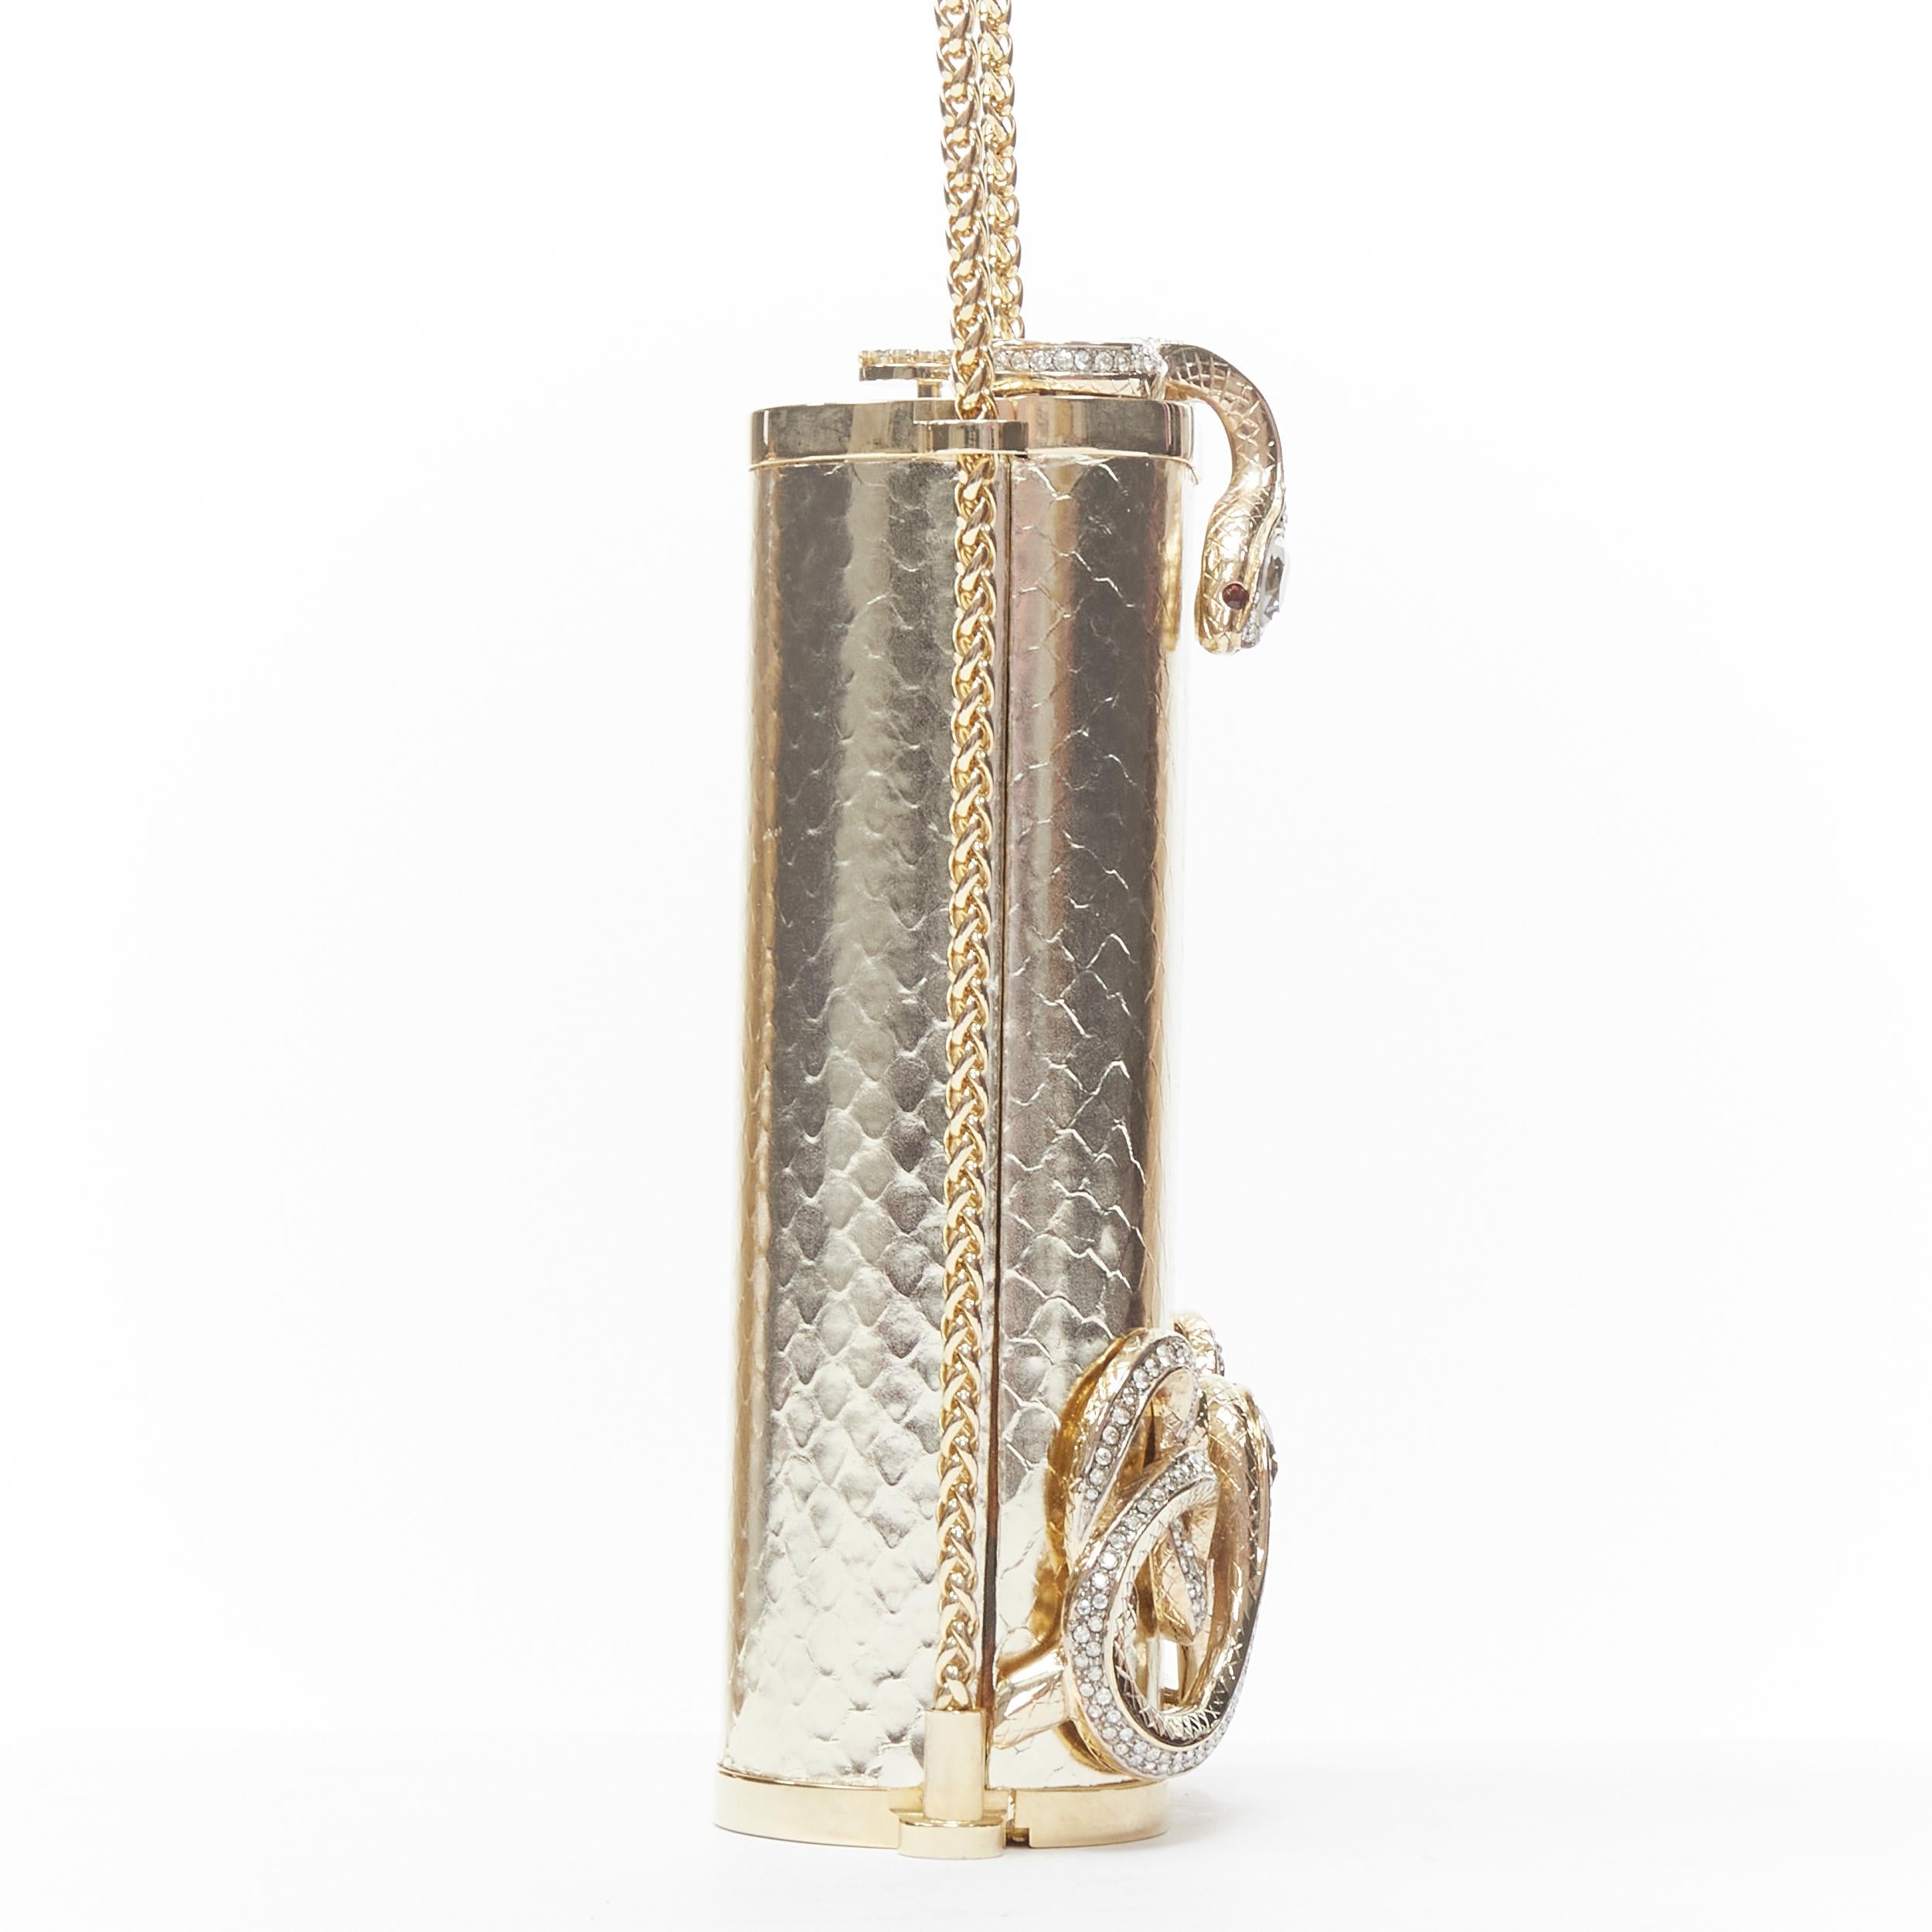 Gold ROBERTO CAVALLI metallic gold leather crystal Serpent snake chain box clutch